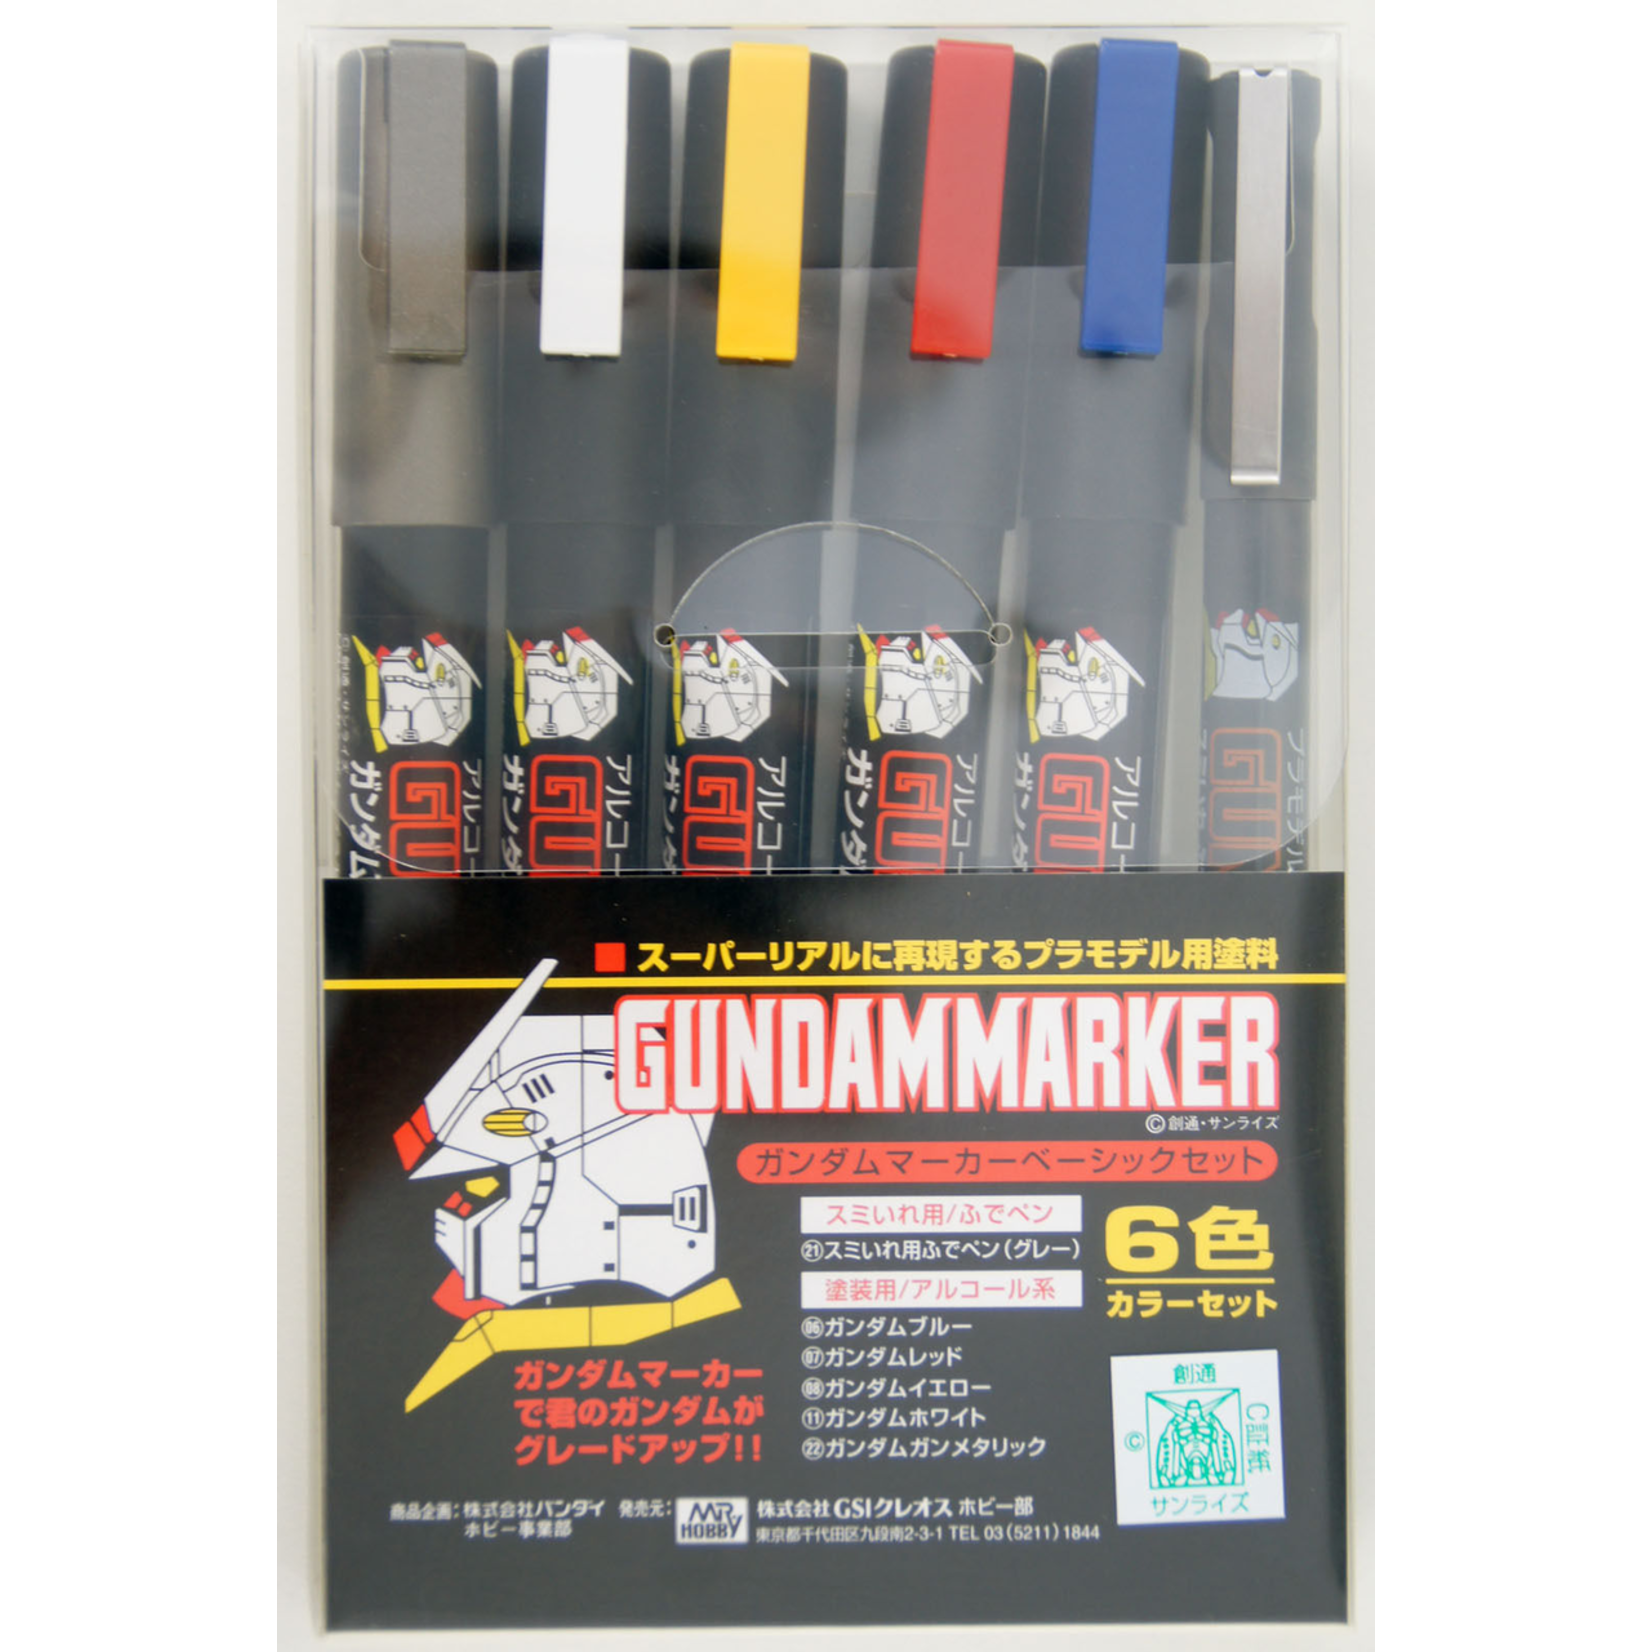 Mr. Hobby Gundam Marker Basic (6) Set